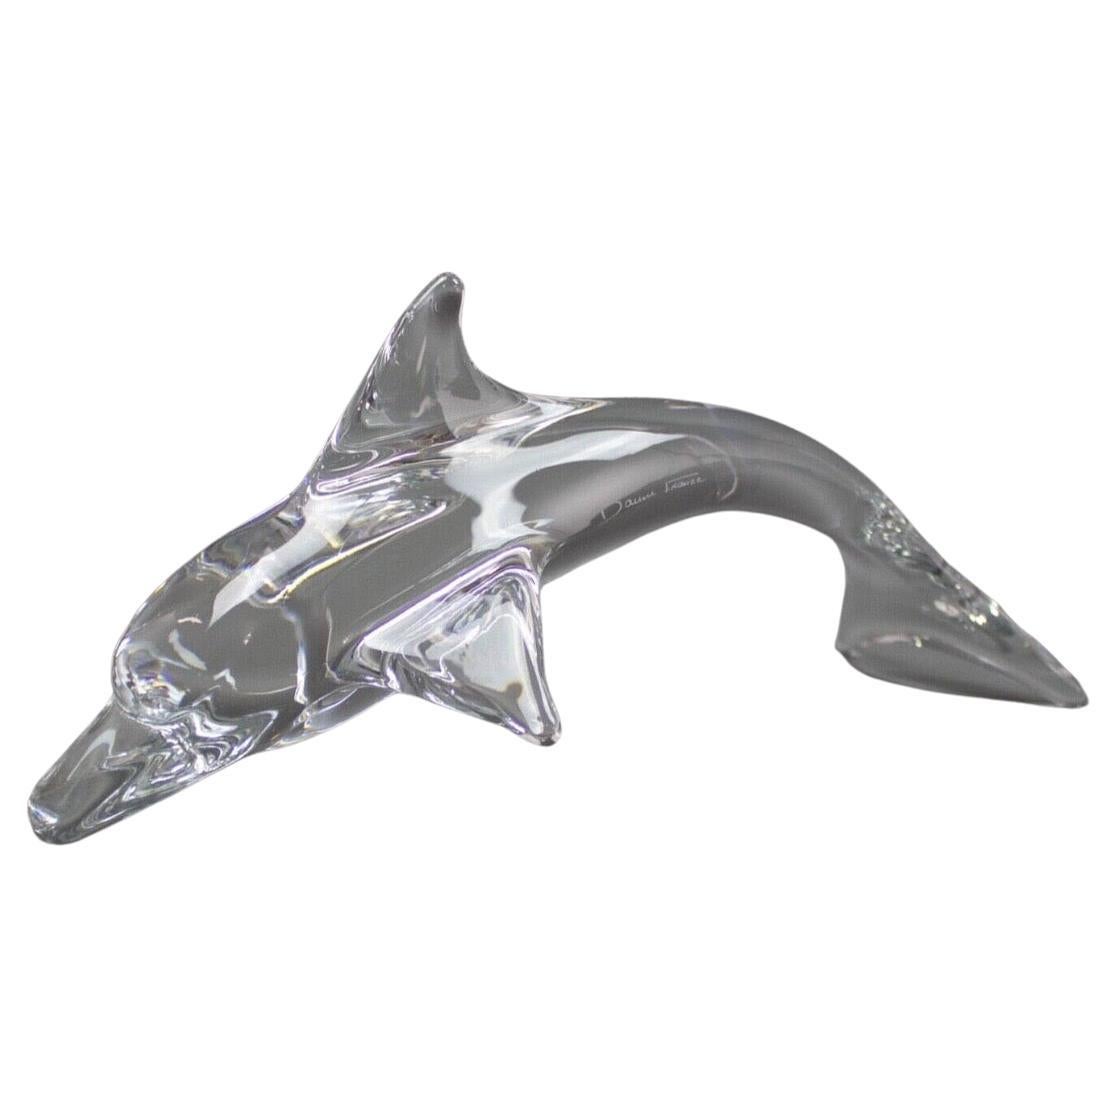 Delphin-Skulptur aus klarem Kristall-Kunstglas von Daum of France